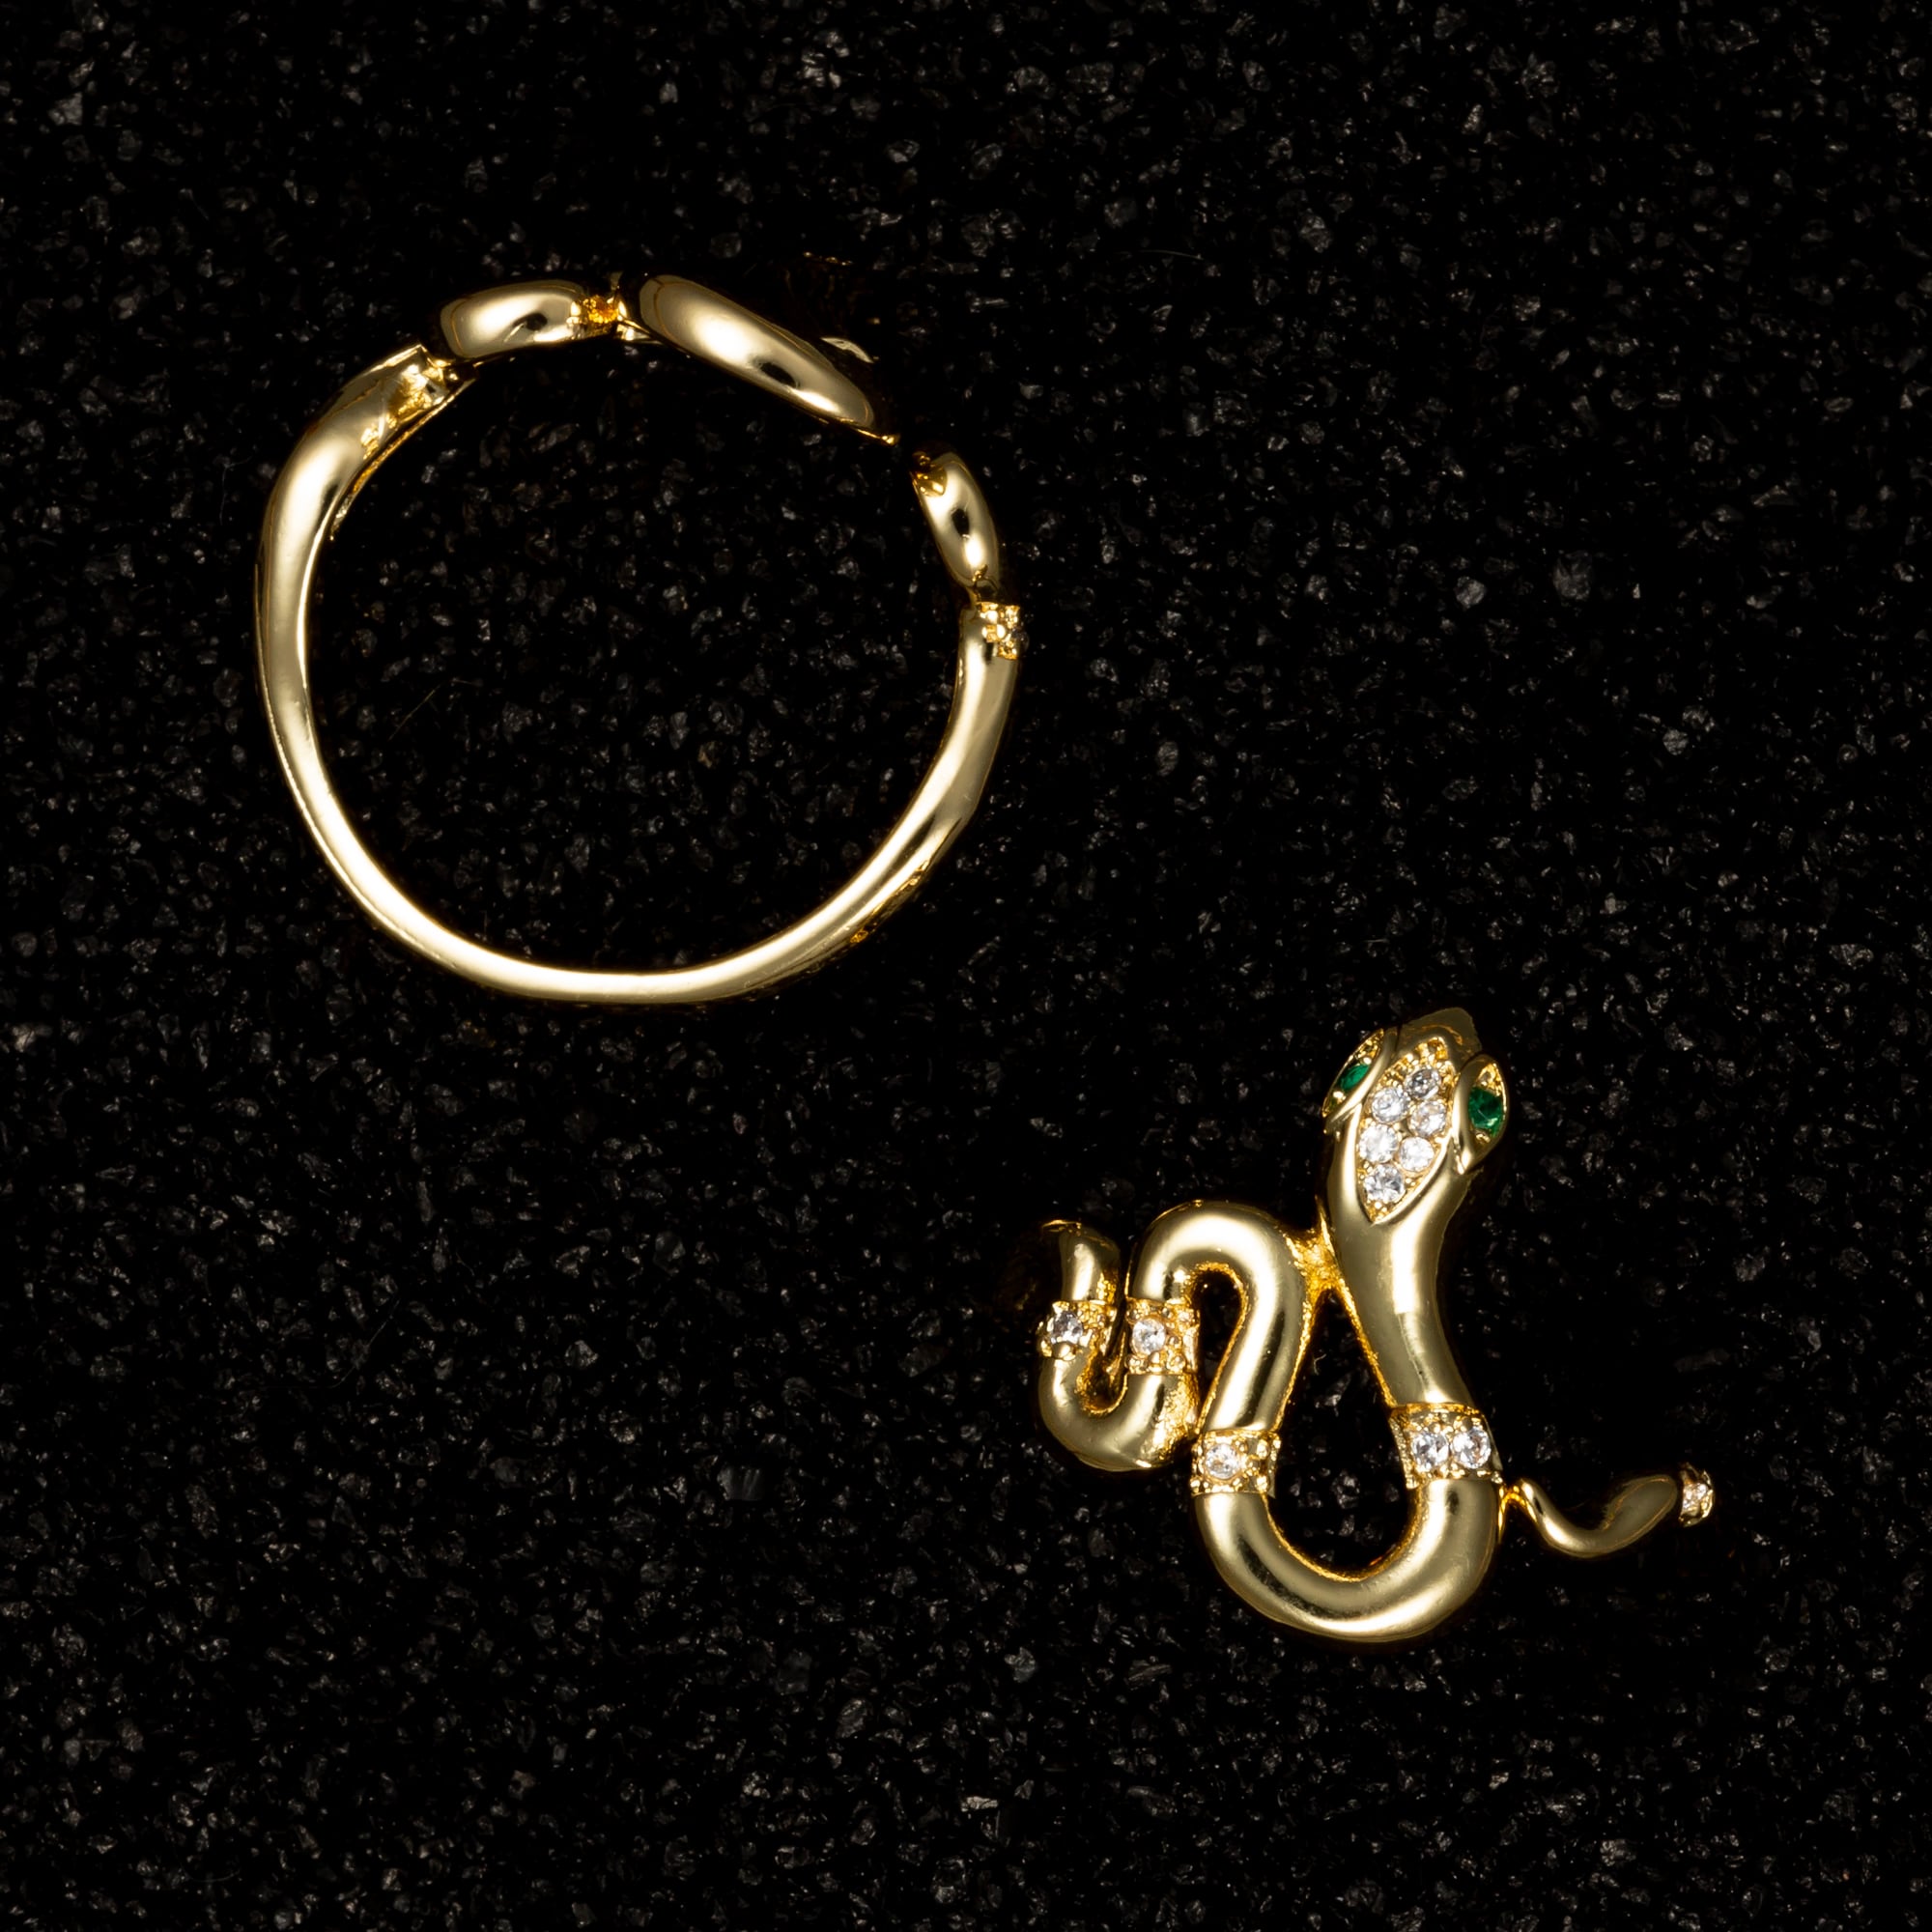 Winding Snake Ring with Gemstones - Rings